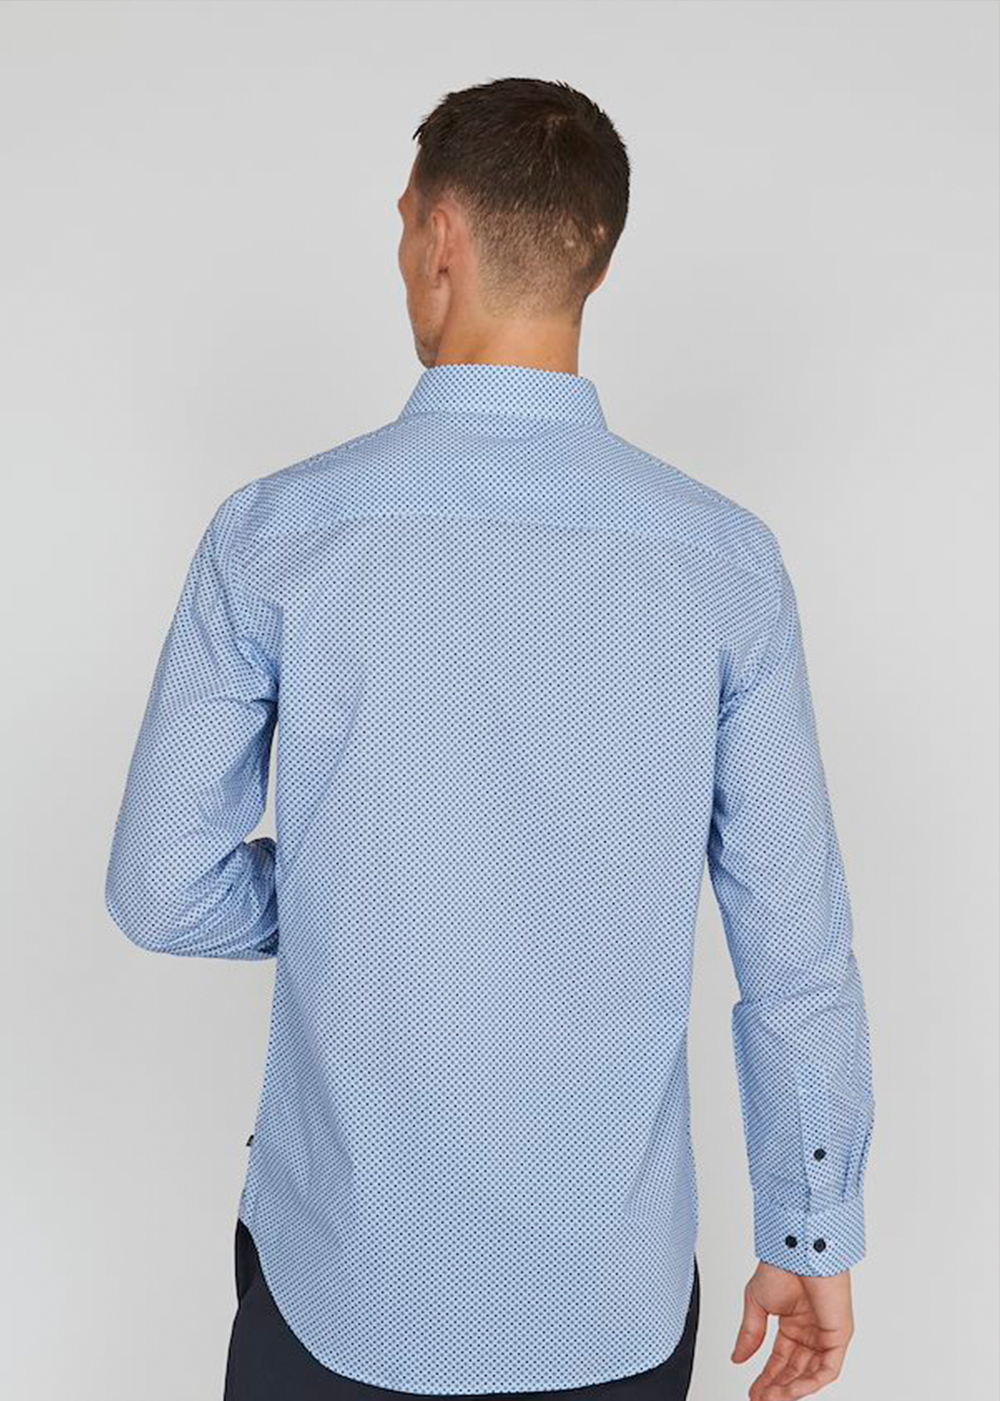 Trostol Shirt - Insignia Blue - Matinique Canada - Danali - 30207169